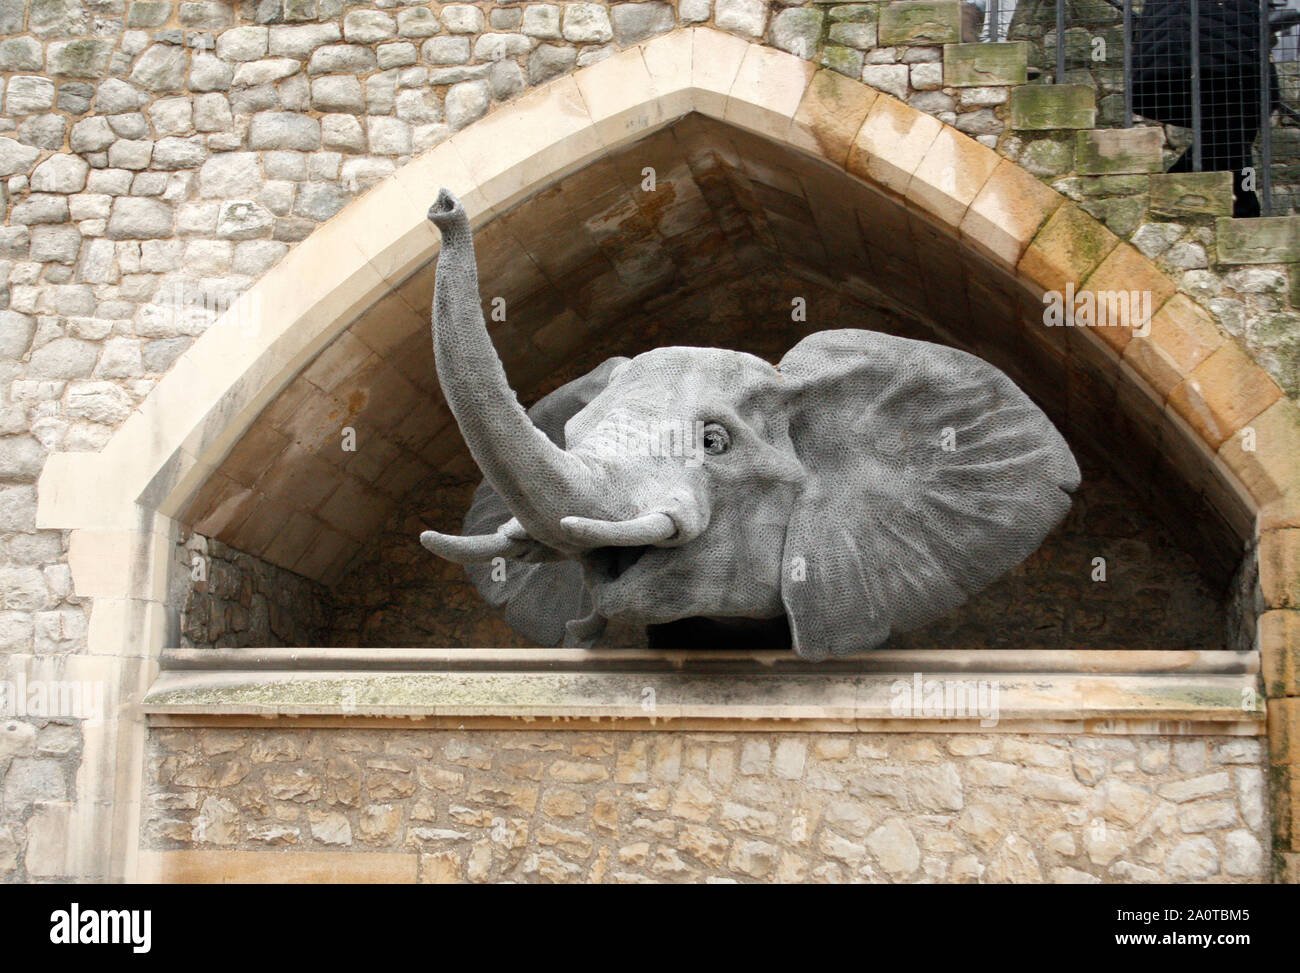 La escultura del elefante en la Torre de Londres. Foto de stock